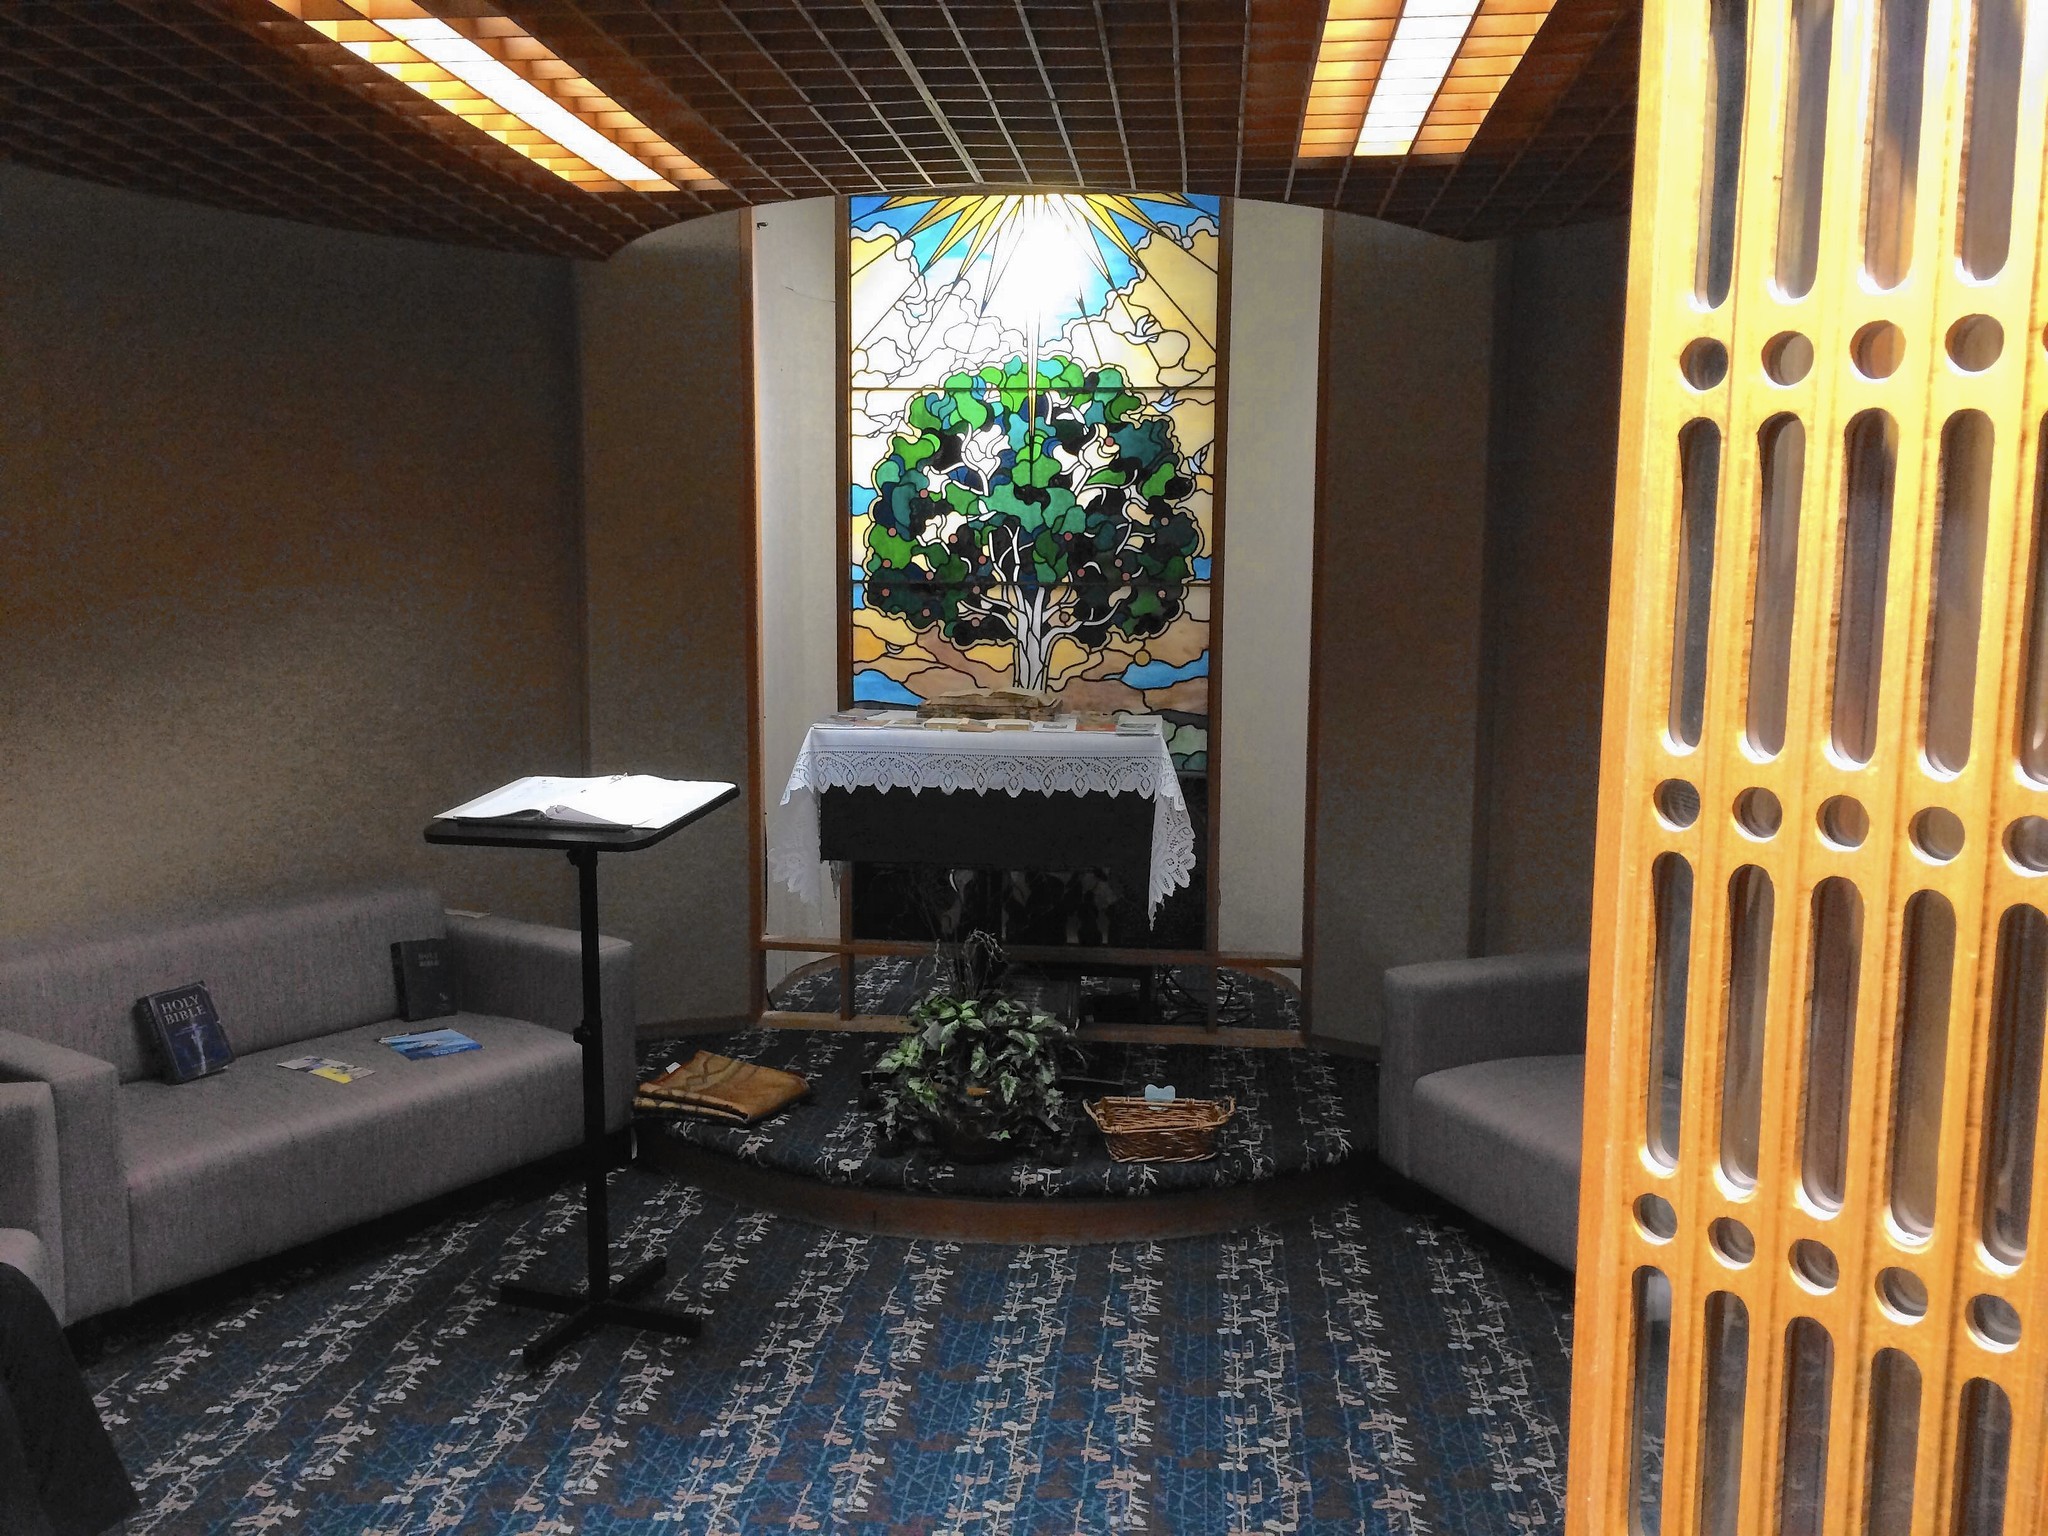 Orlando International opening reflection room for Muslim travelers - Orlando Sentinel